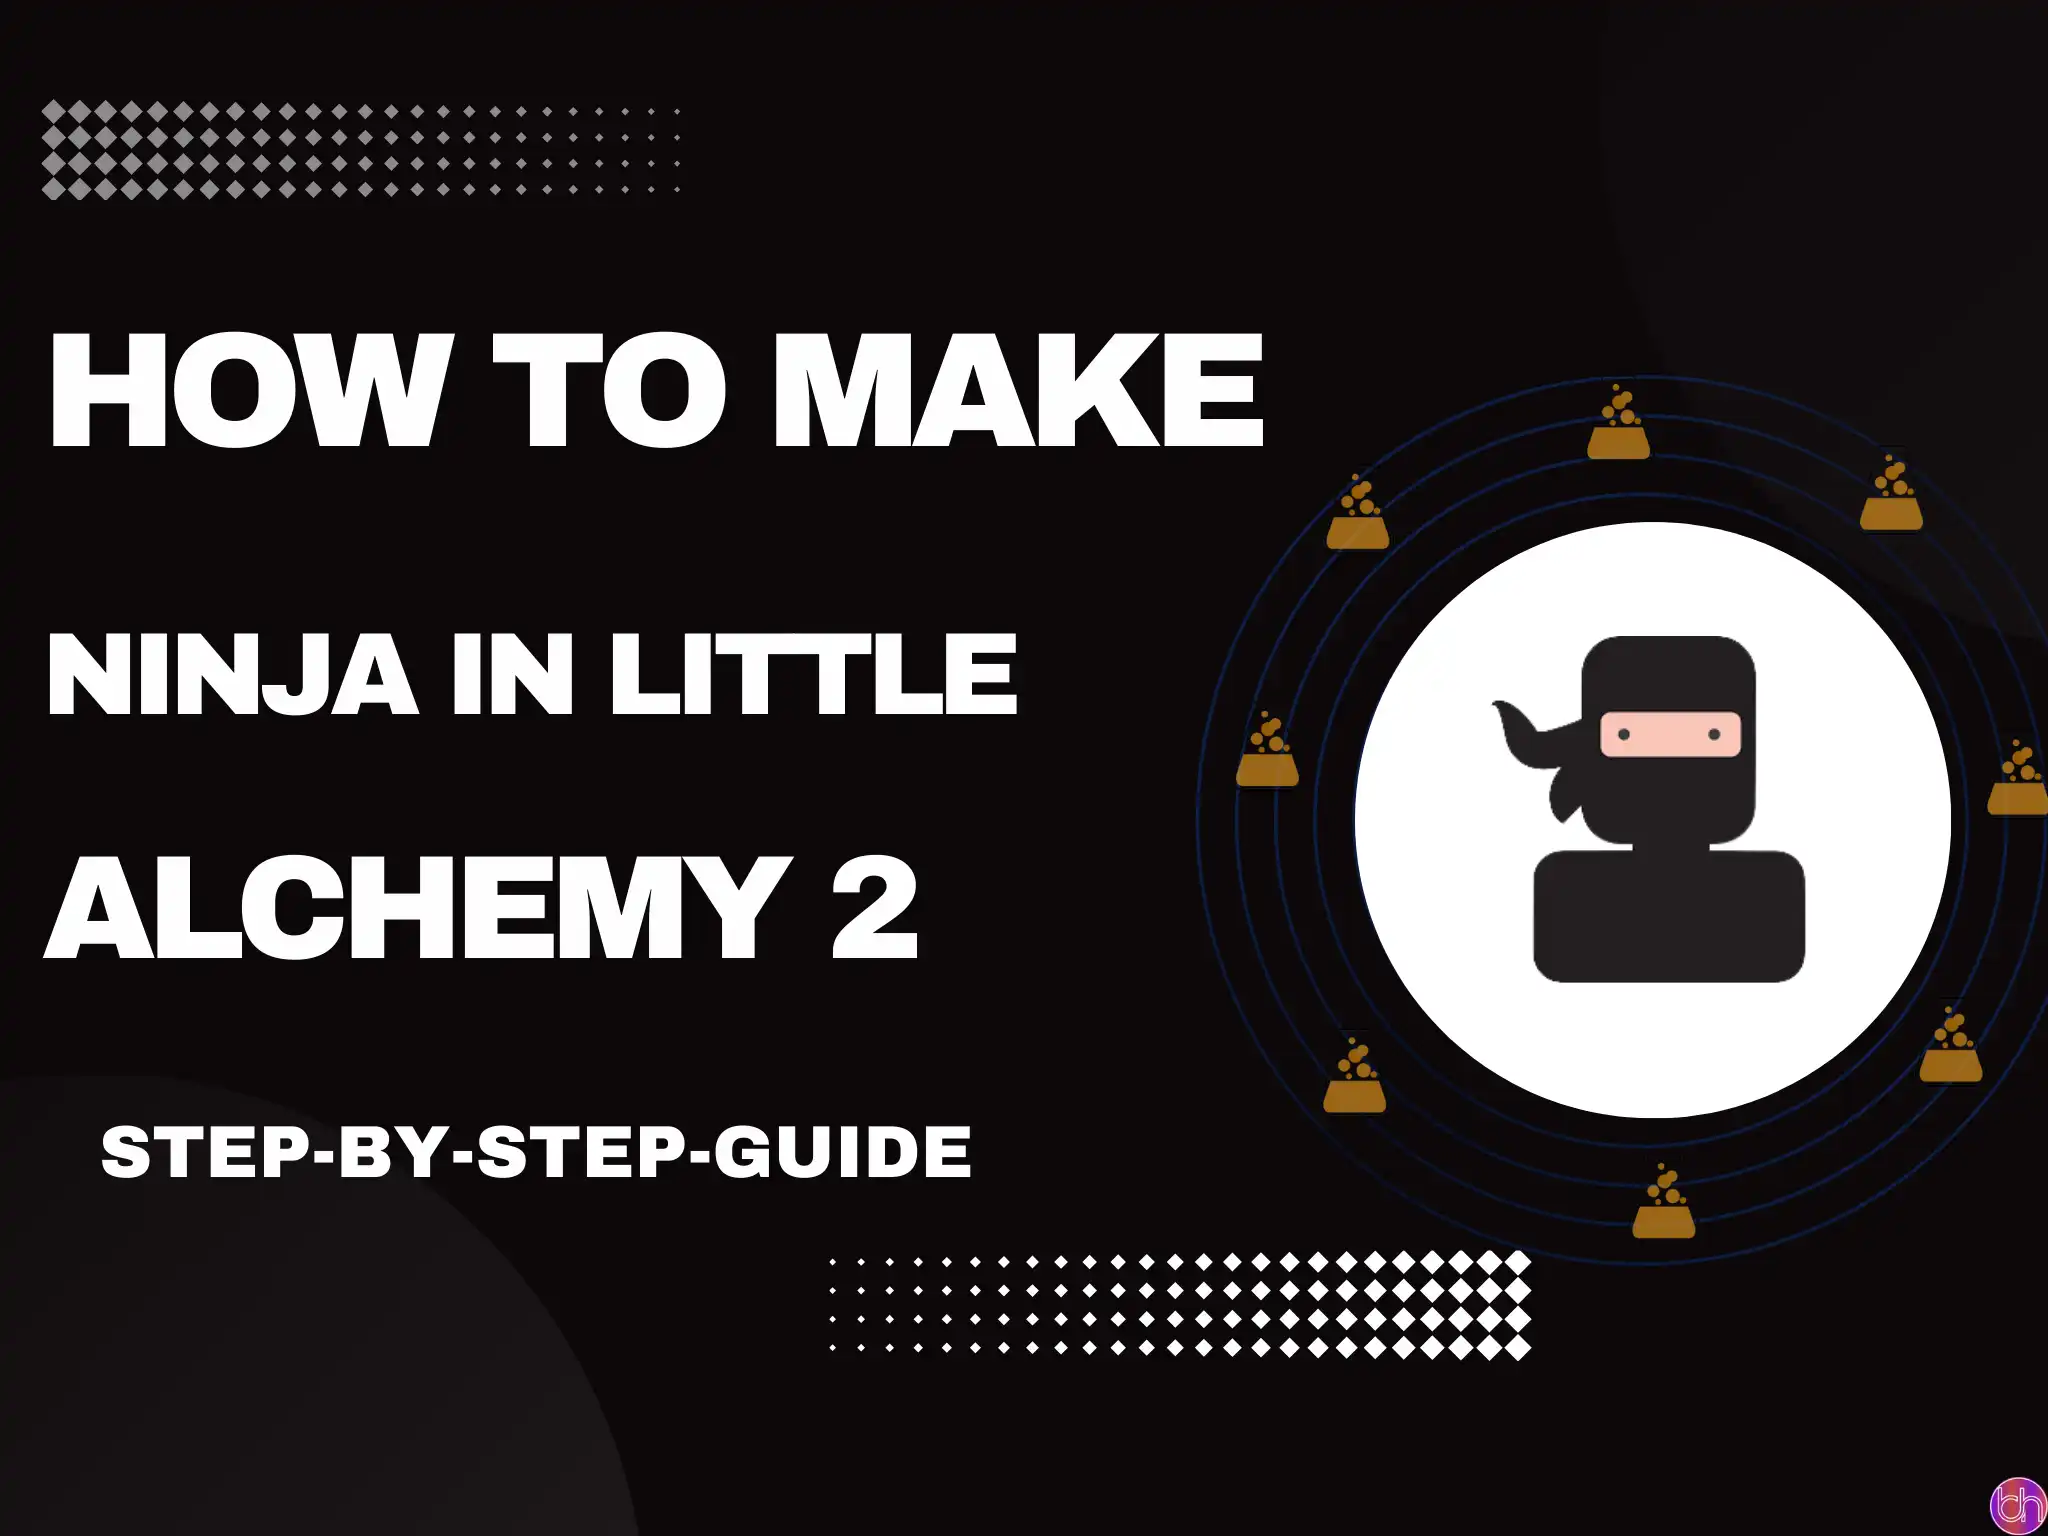 How to make Ninja in little alchemy 2